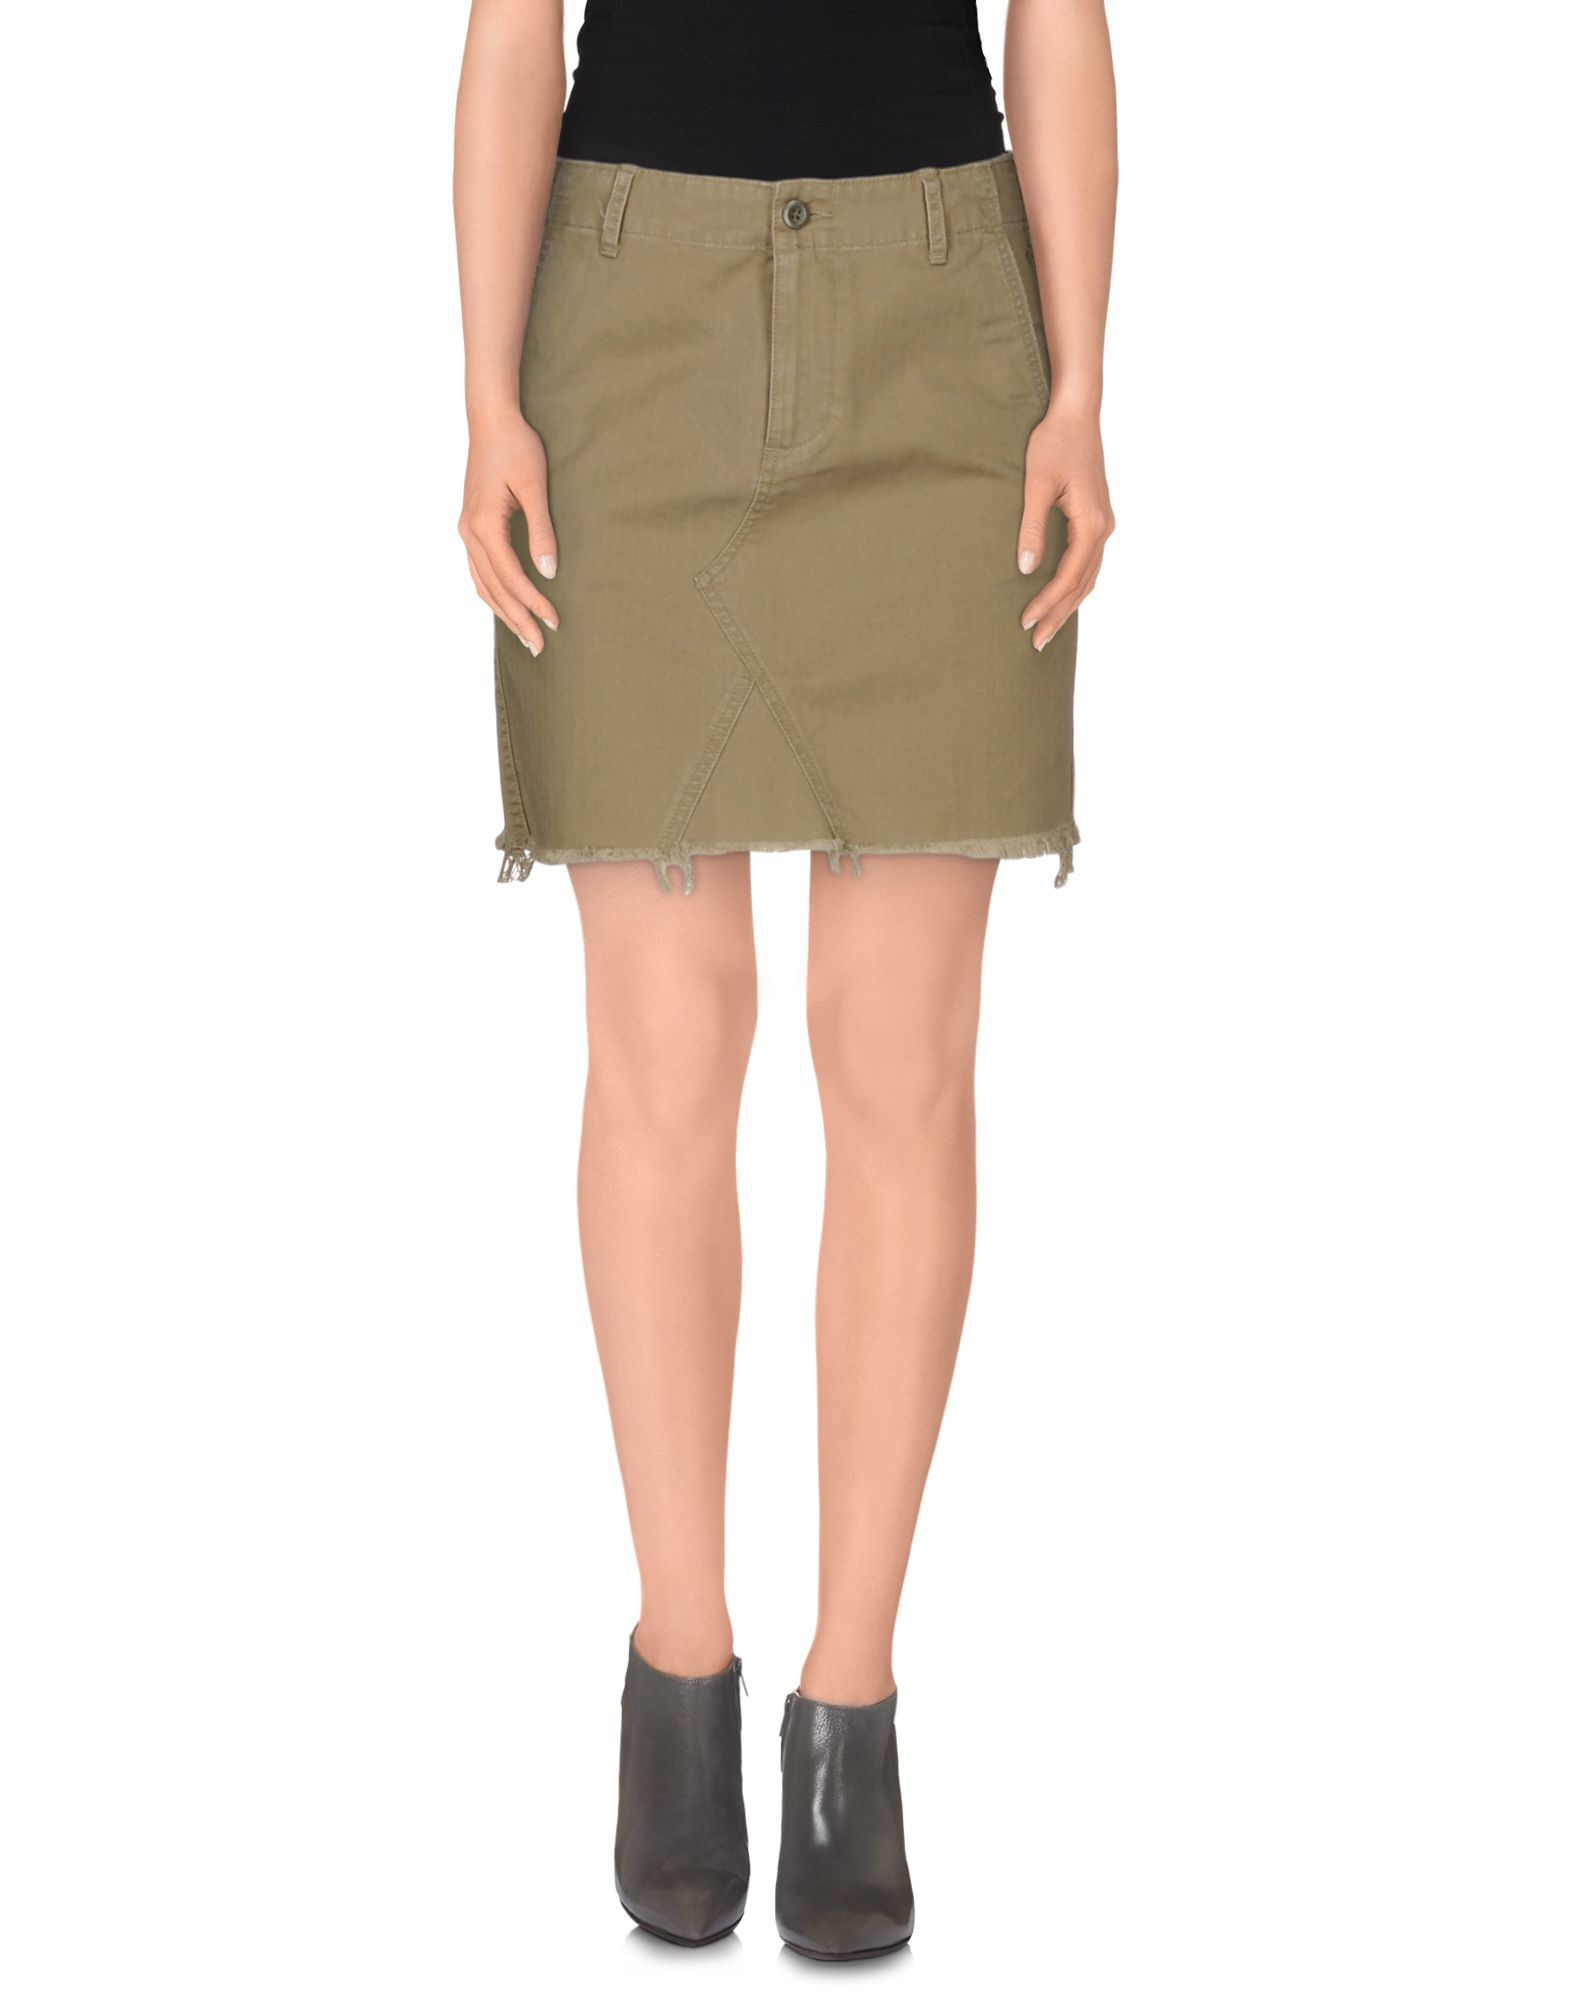 Lyst - Denim & Supply Ralph Lauren Mini Skirt in Green